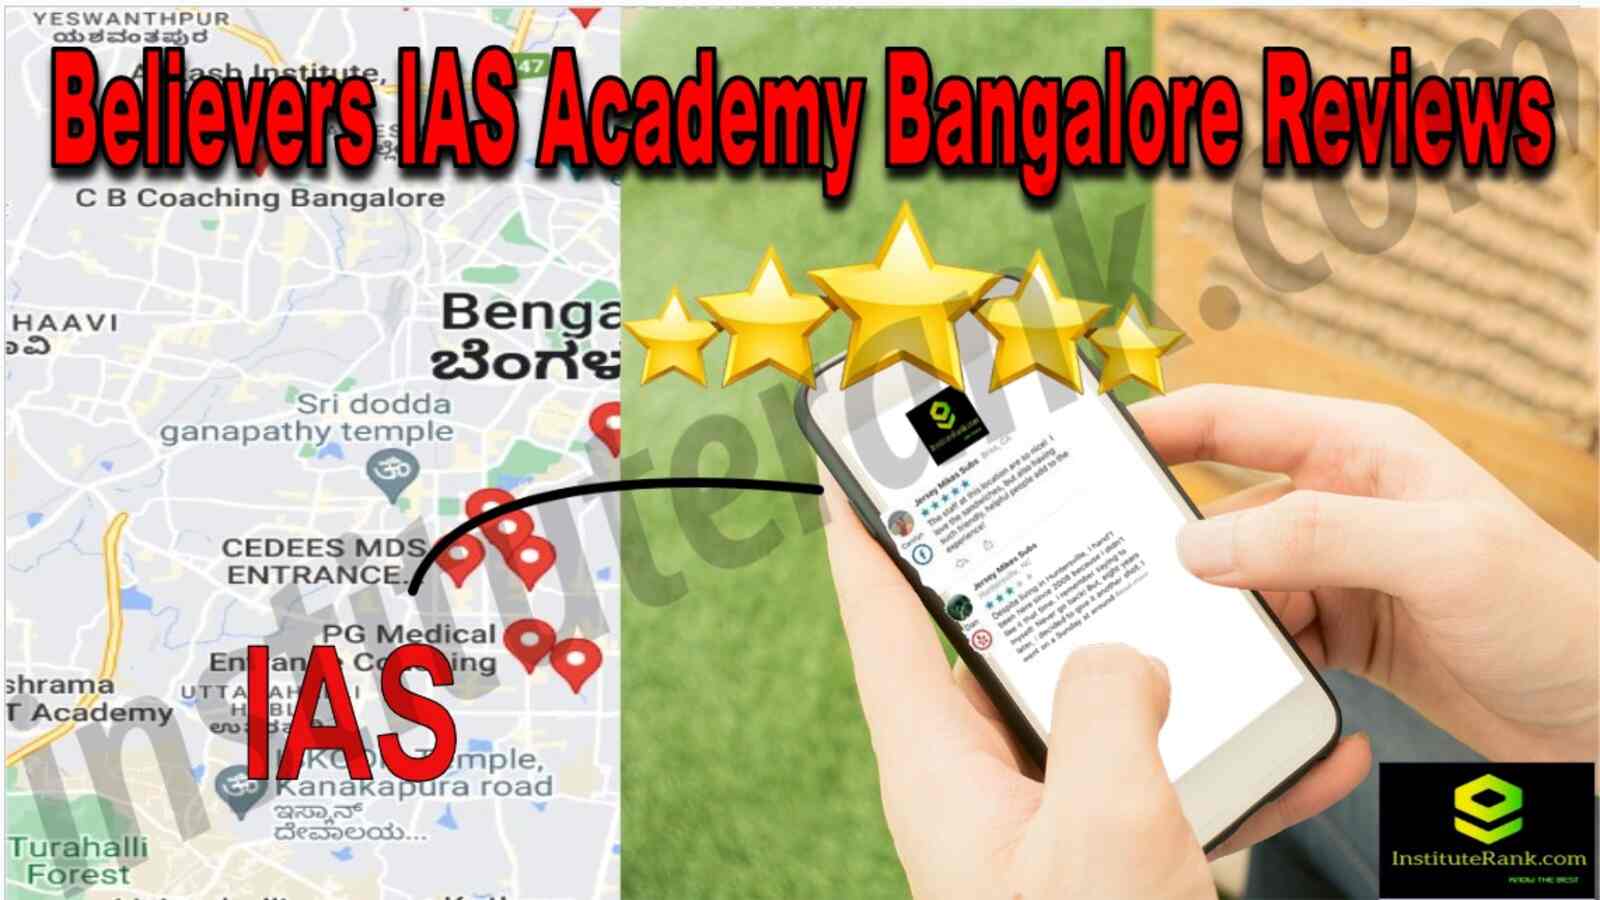 Believers IAS Academy Bangalore Reviews